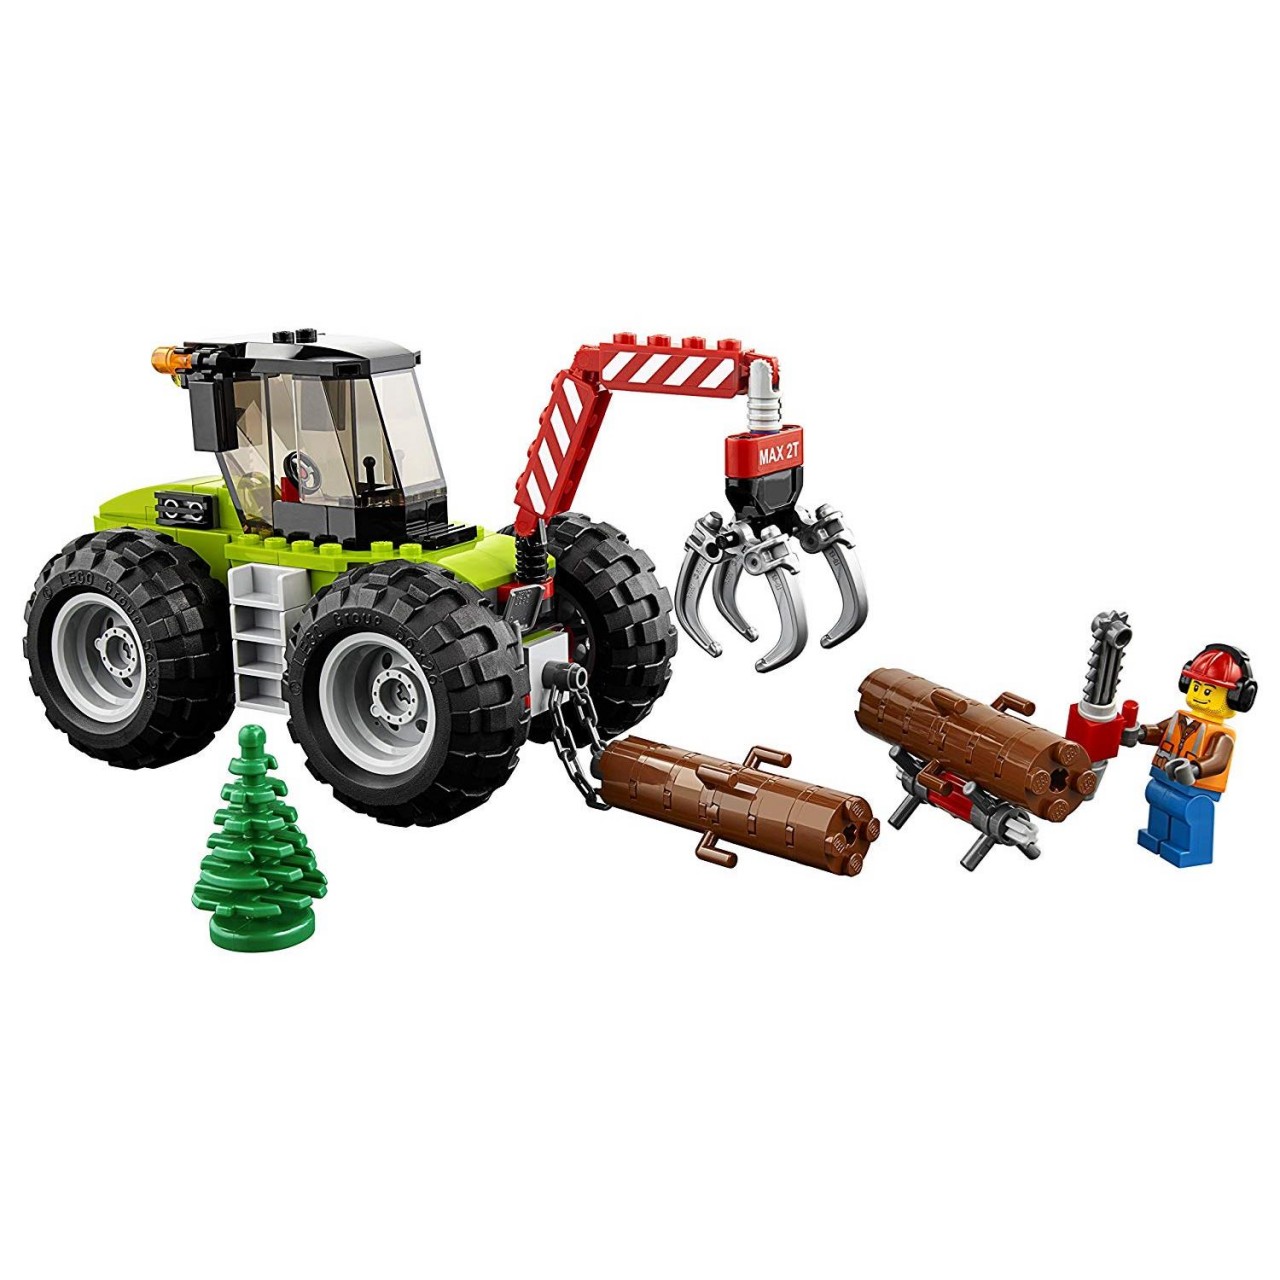 LEGO CITY 60181 Forsttraktor